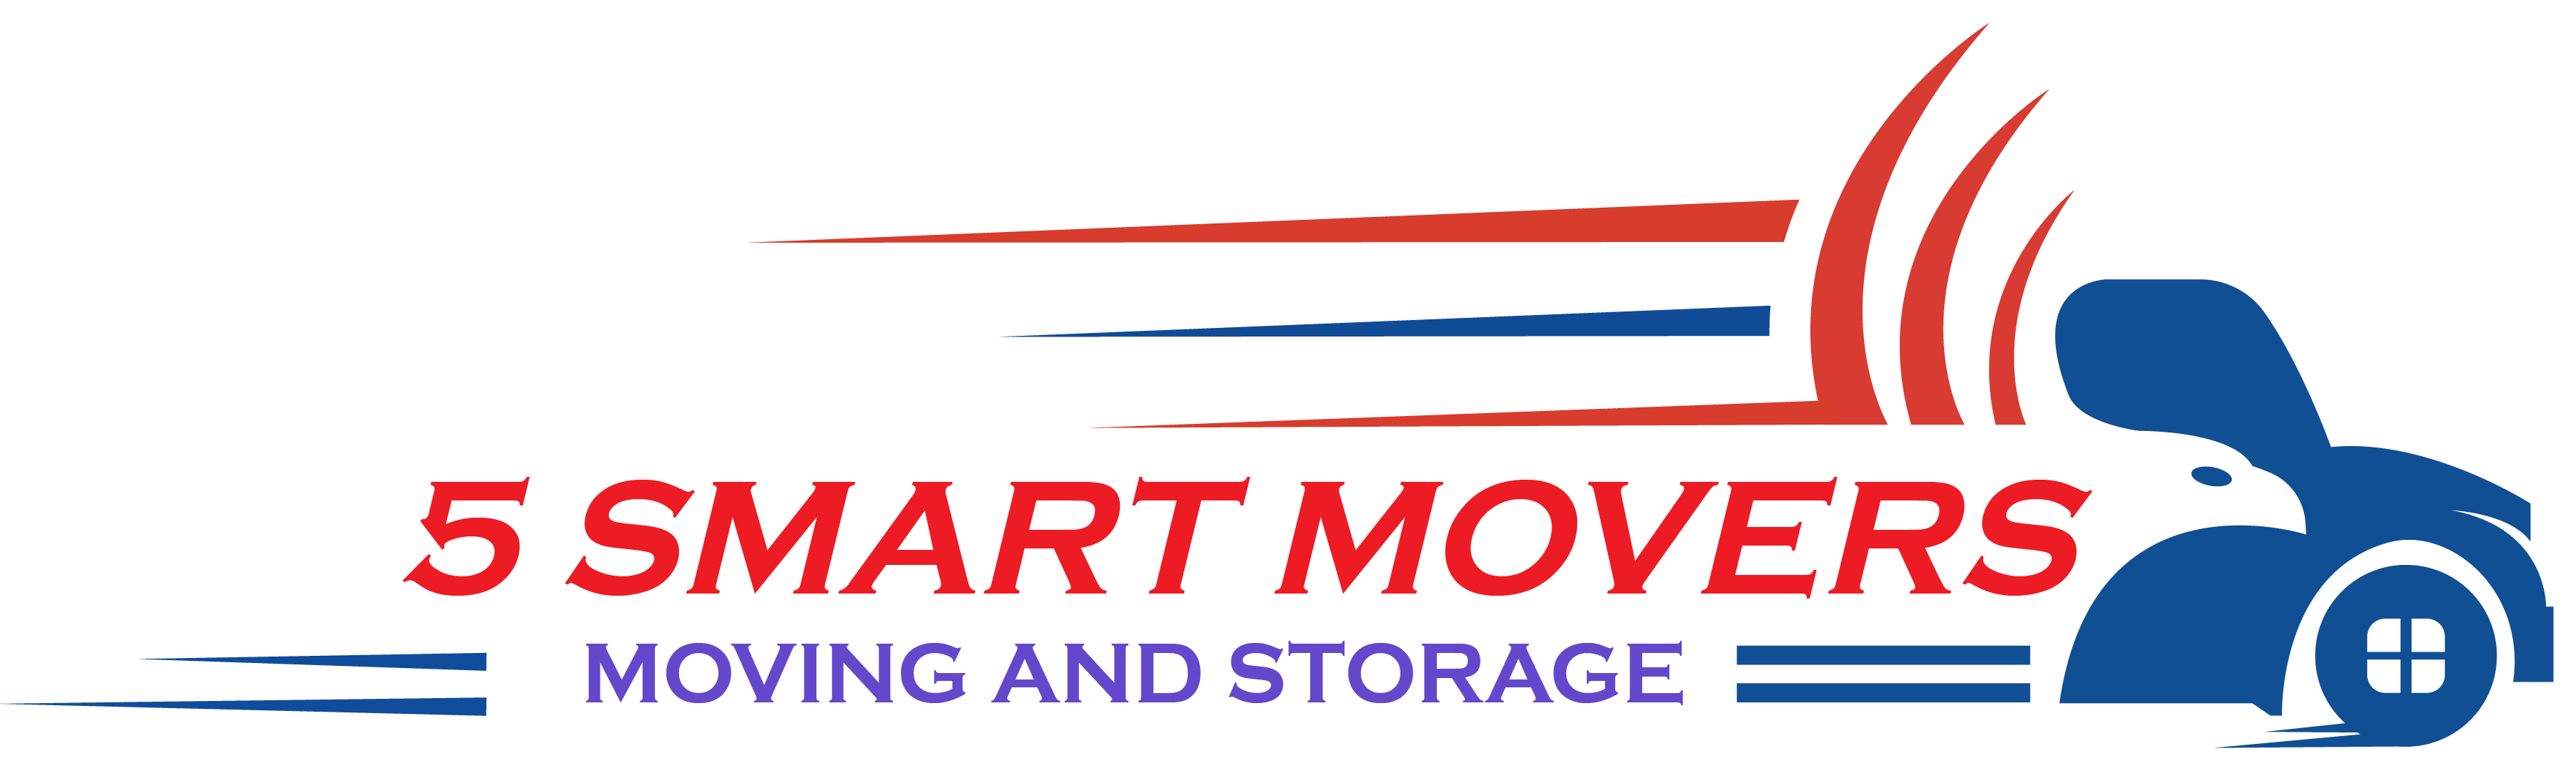 5 Smart Movers, Inc.